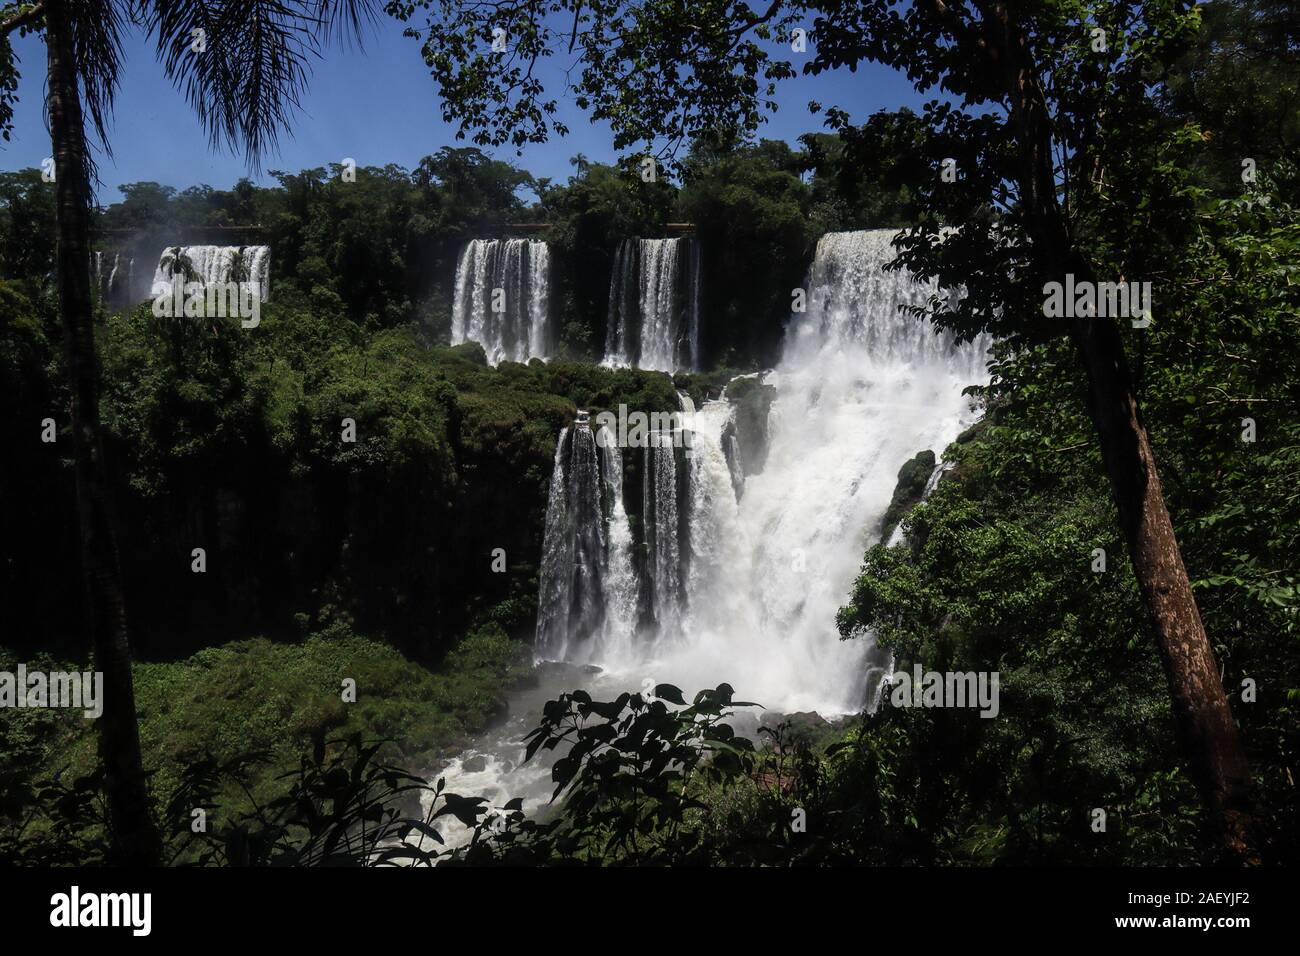 IGUAZU, 05.12.2019: View of Iguazu Falls, brazilian and argentinian side with some native species of fauna and flora (Néstor J. Beremblum / Alamy) Stock Photo